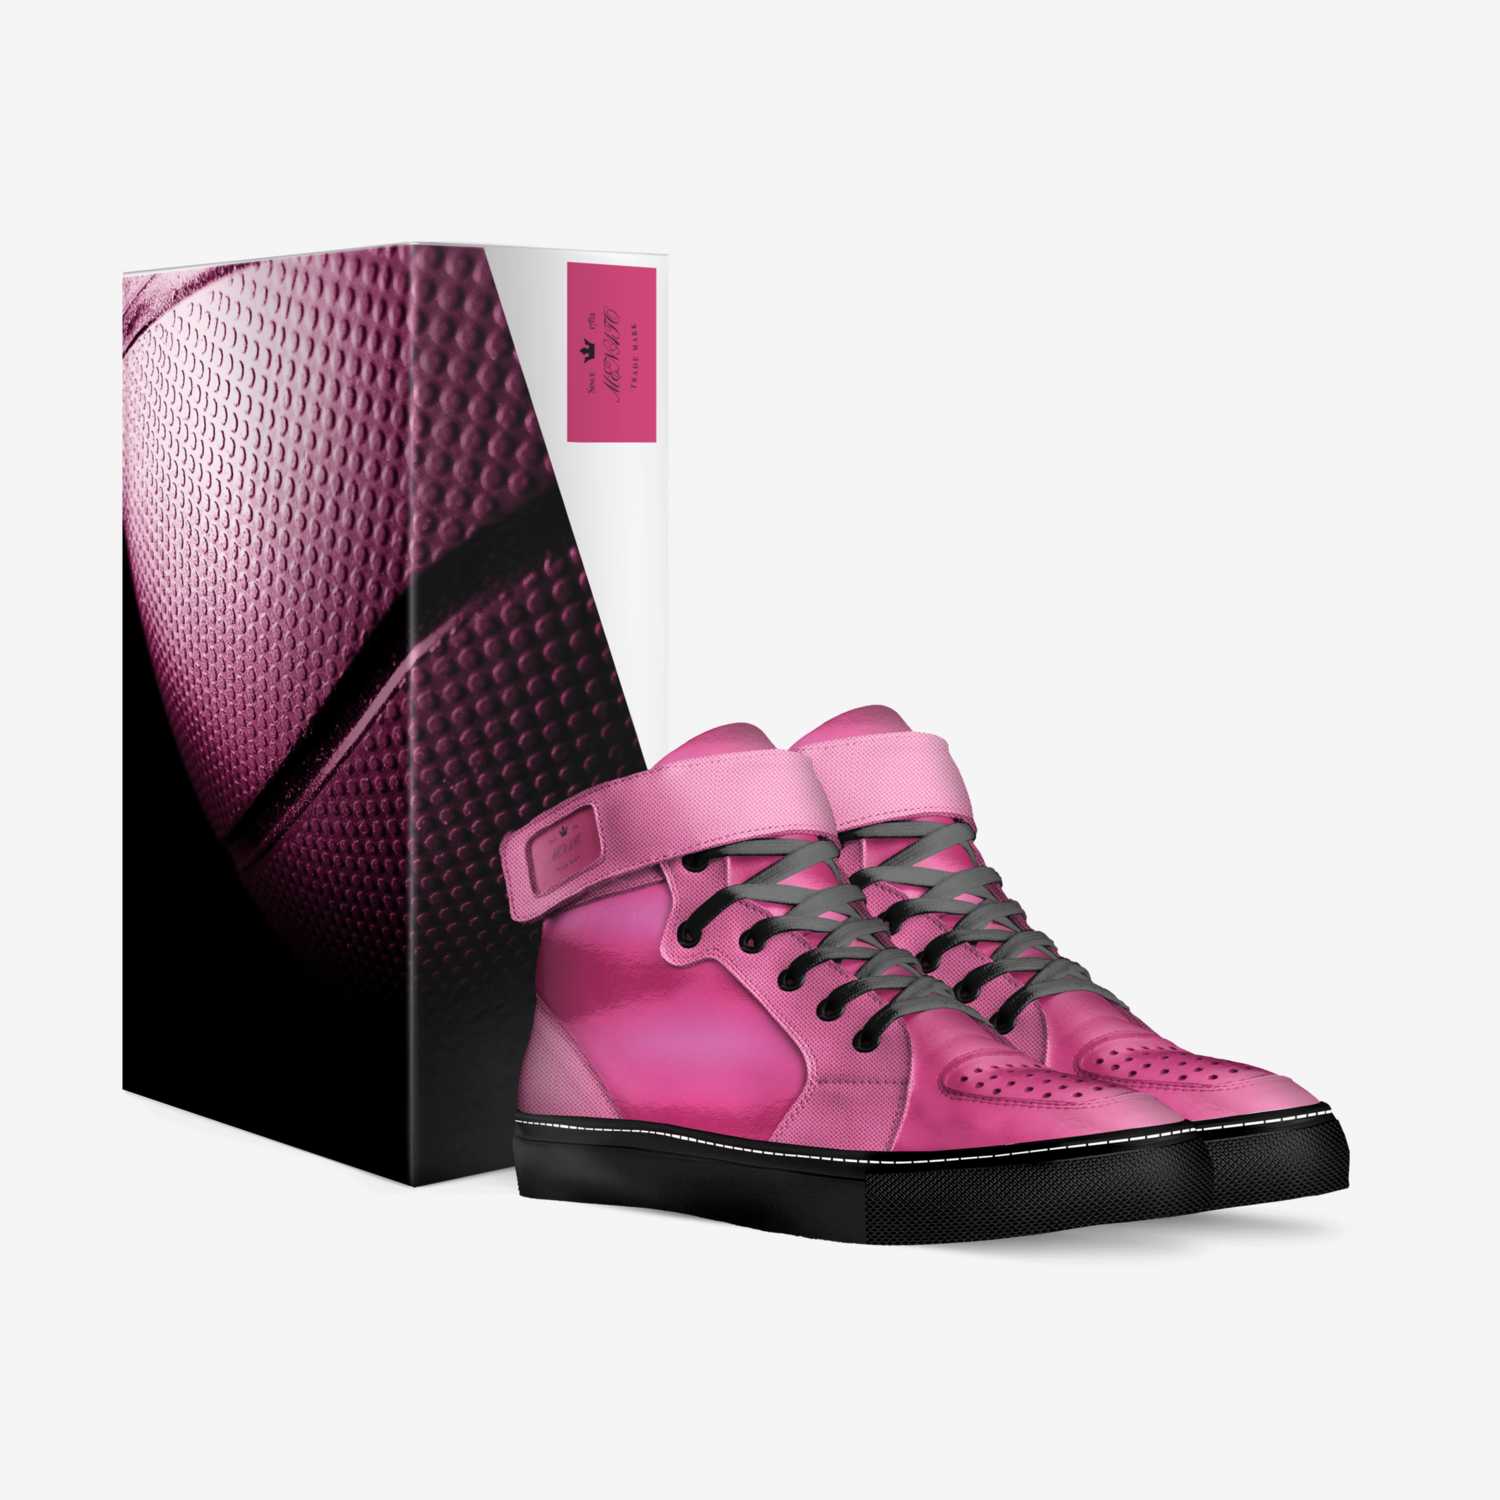 MENATO custom made in Italy shoes by Alessandro Menato | Box view